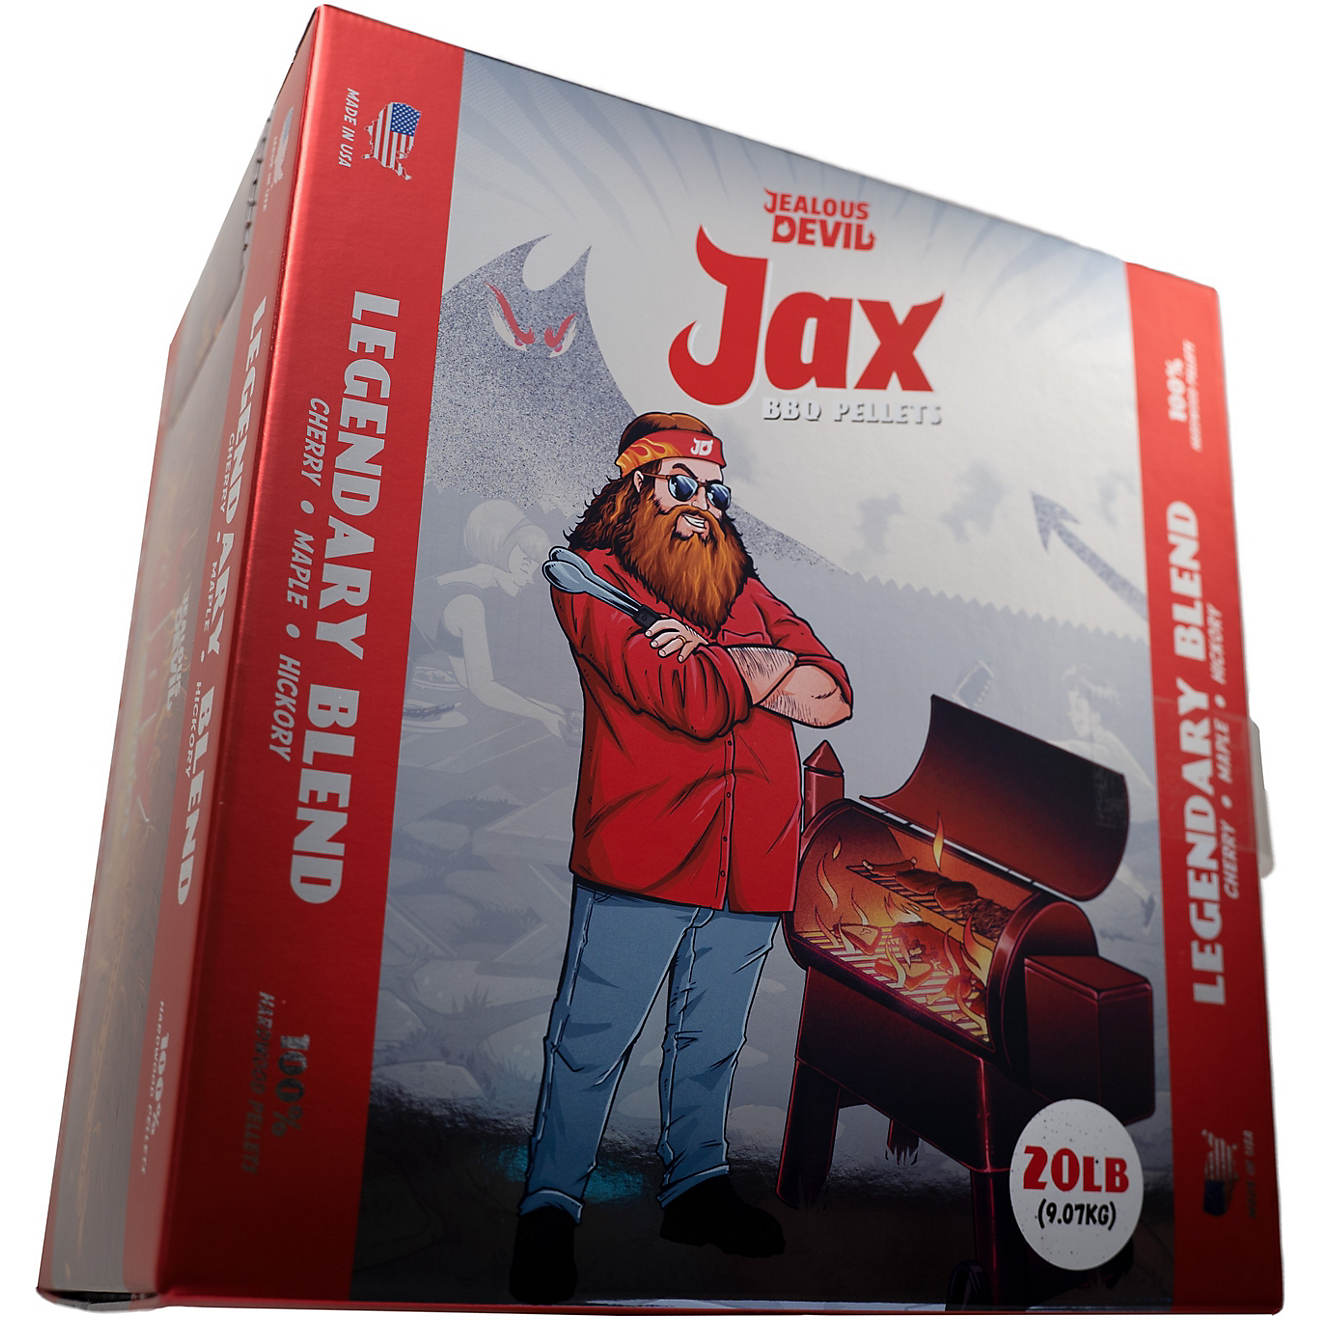 Jealous Devil Jax Legendary Blend Hardwood BBQ Pellets, 20 lbs                                                                   - view number 1